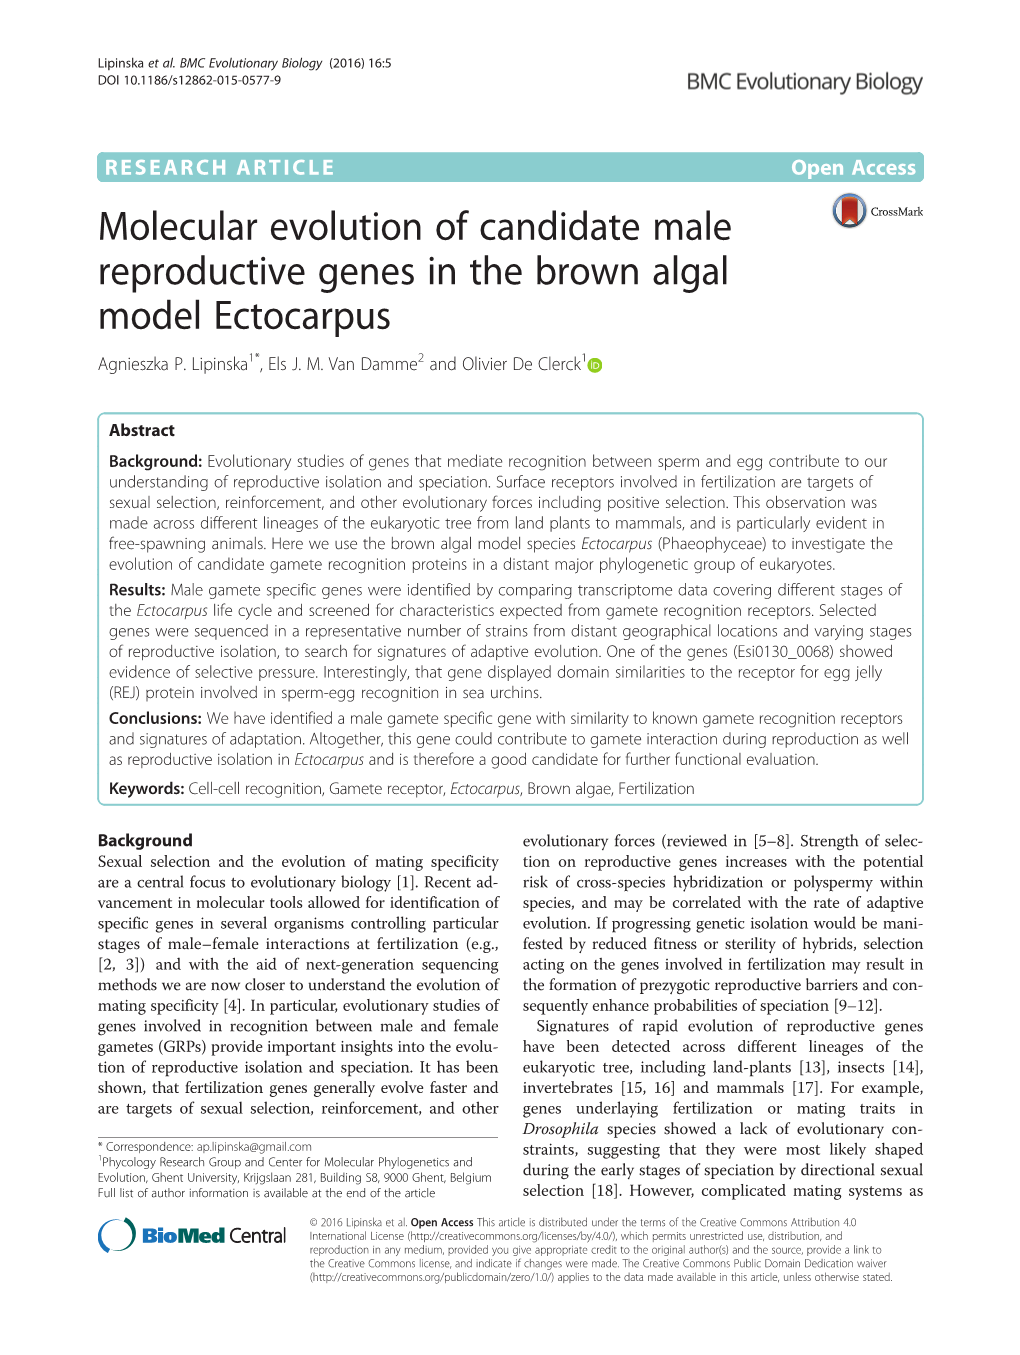 Molecular Evolution of Candidate Male Reproductive Genes in the Brown Algal Model Ectocarpus Agnieszka P